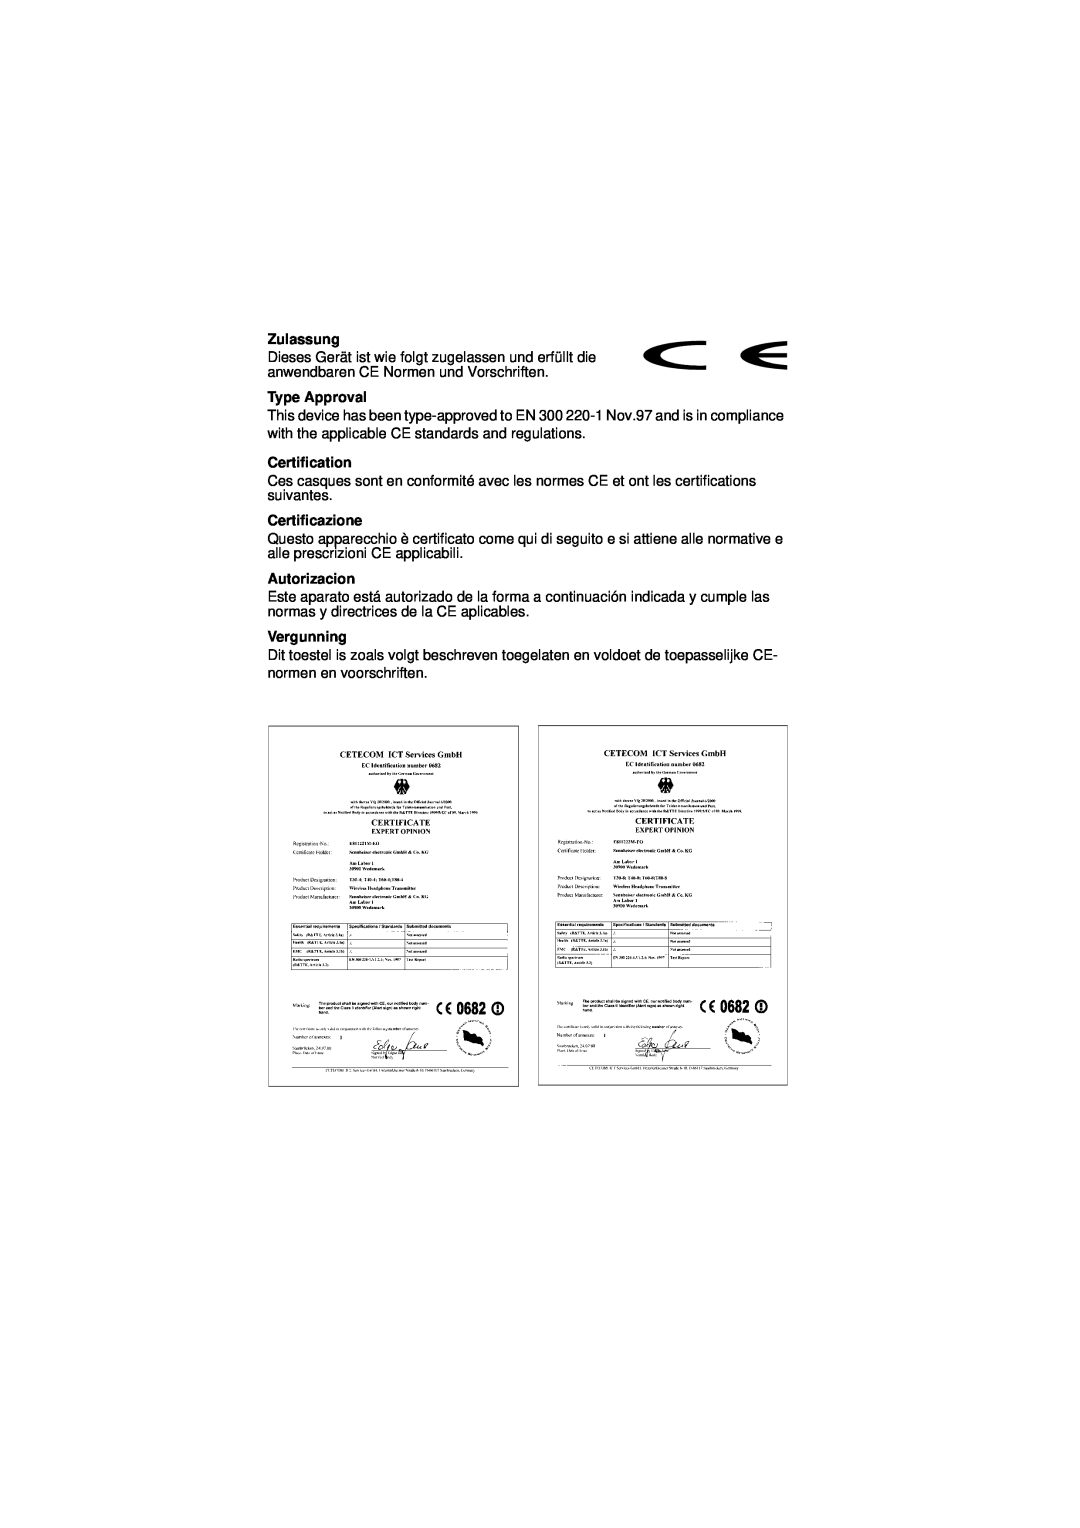 Sennheiser RS 45 instruction manual Zulassung, Type Approval, Certification, Certificazione, Autorizacion, Vergunning 